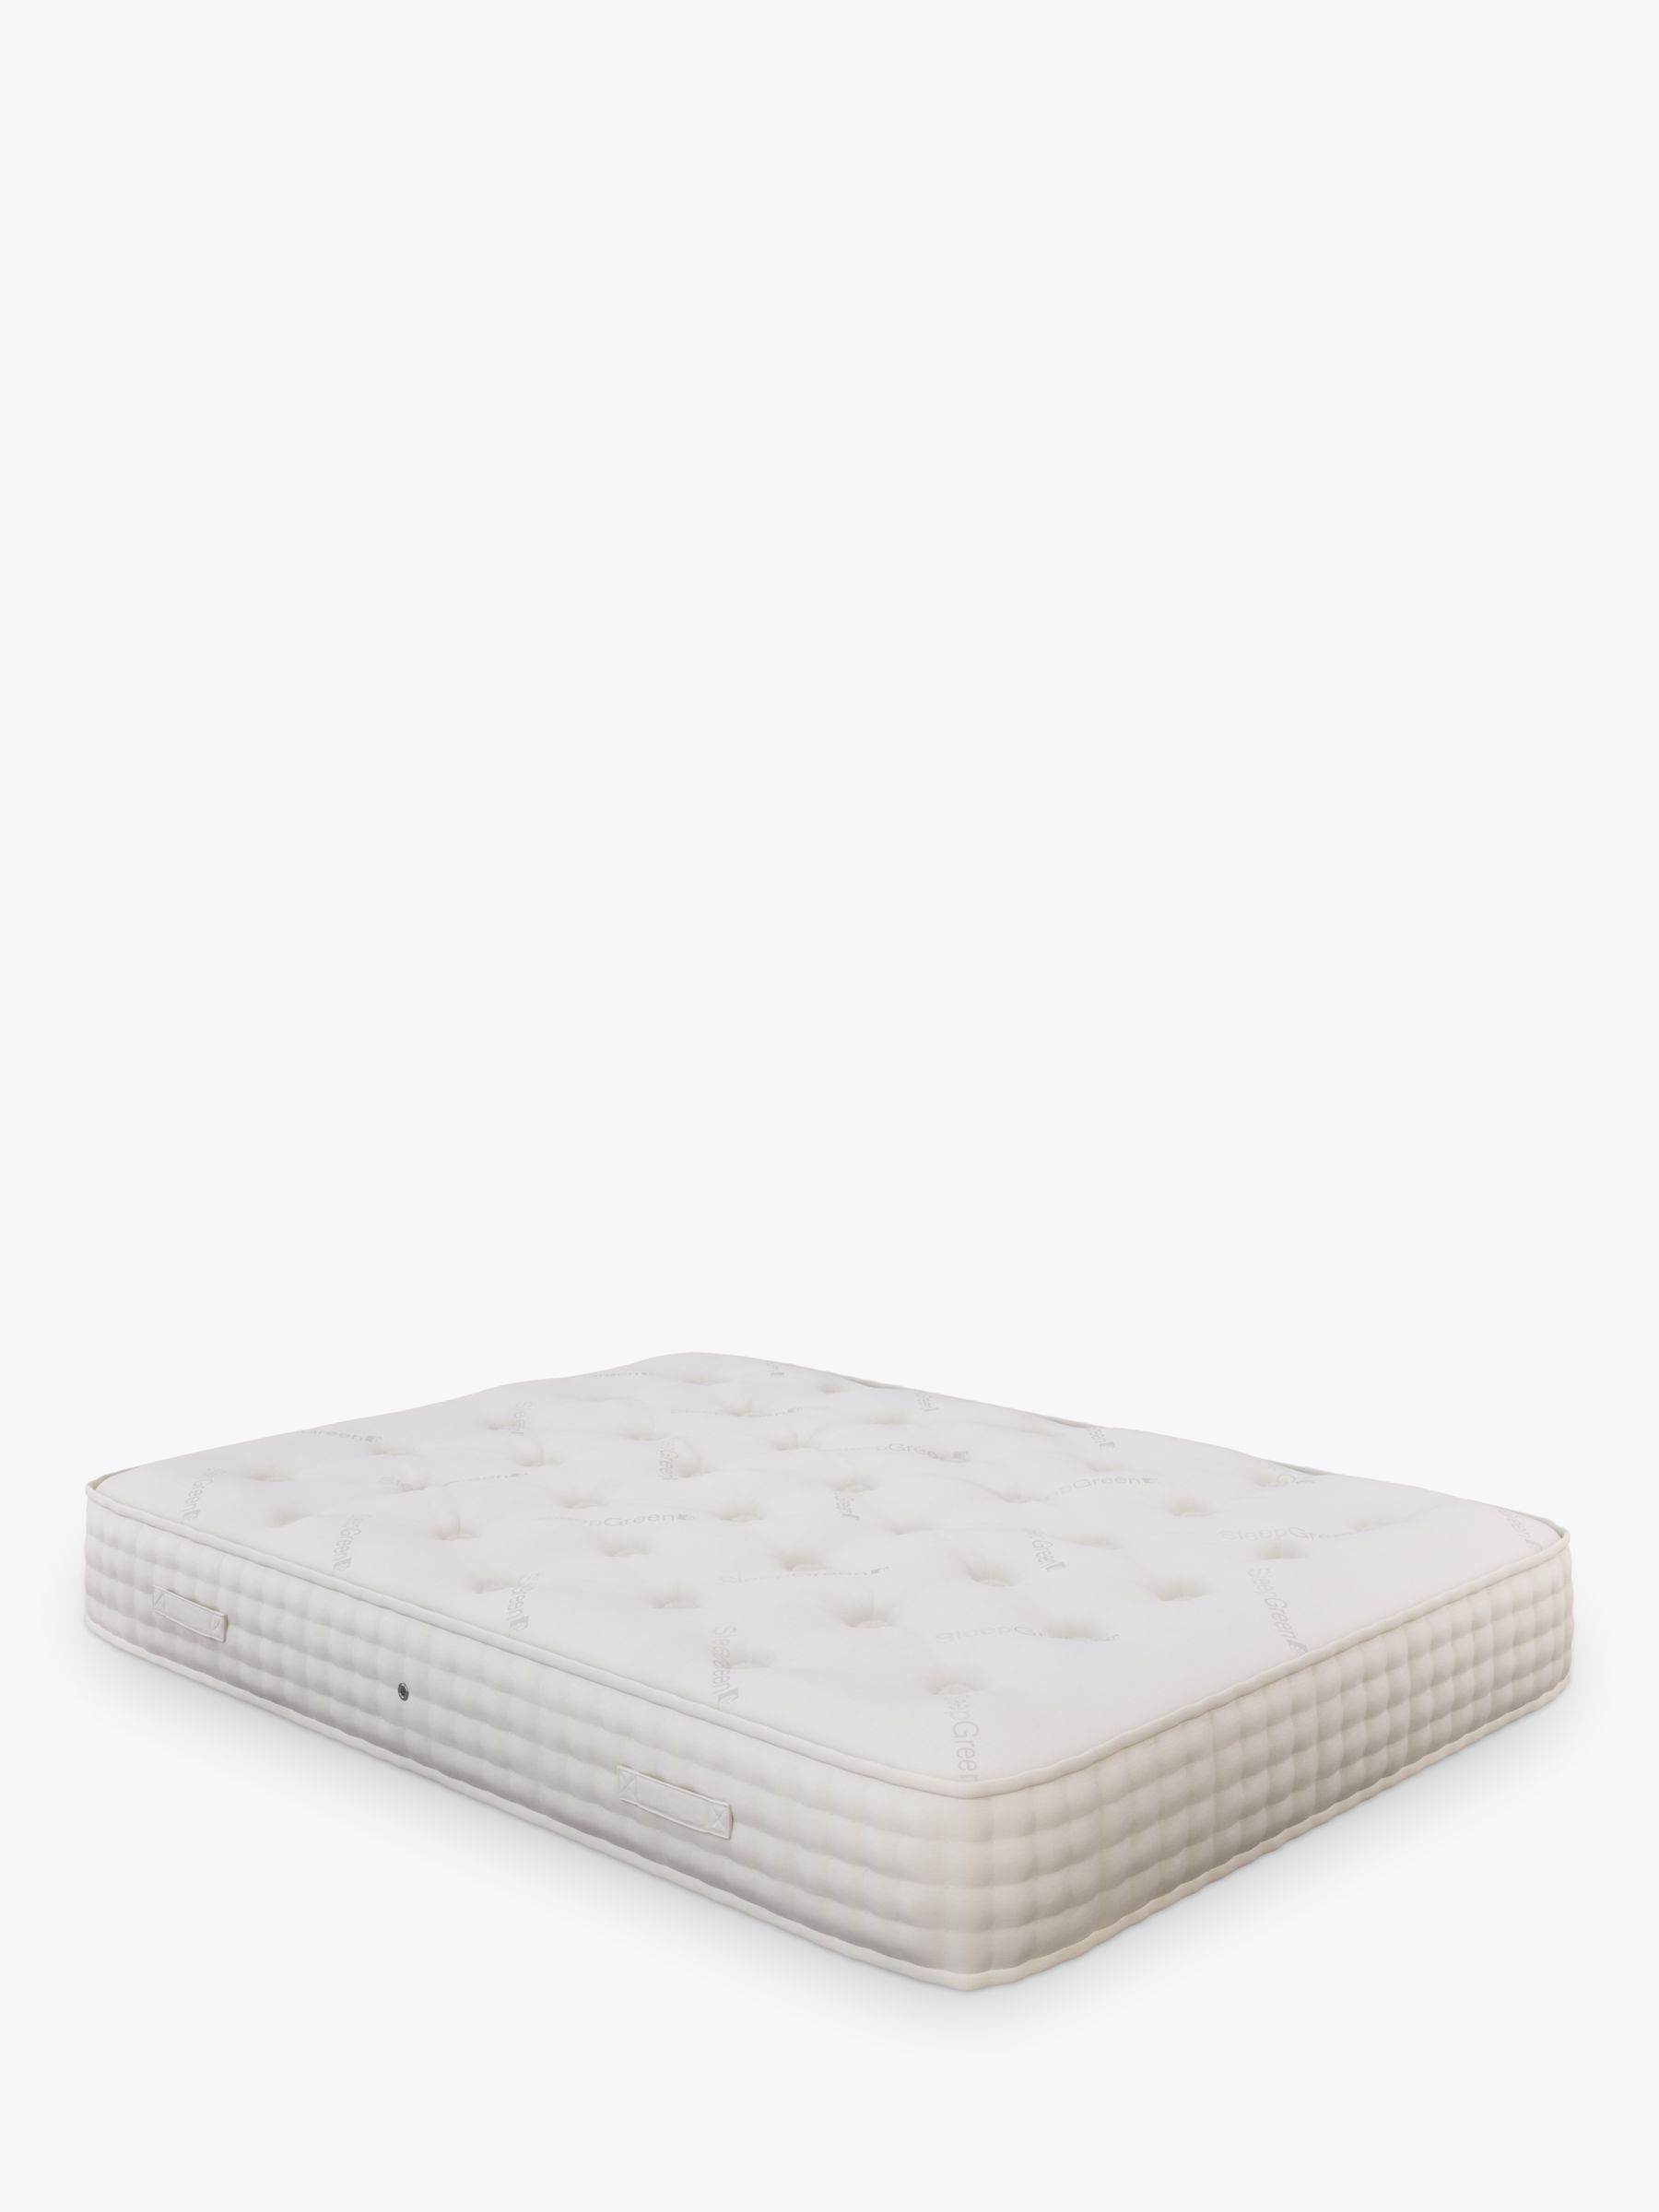 Photo of Sleepgreen vegan natural latex pocket spring mattress medium tension double